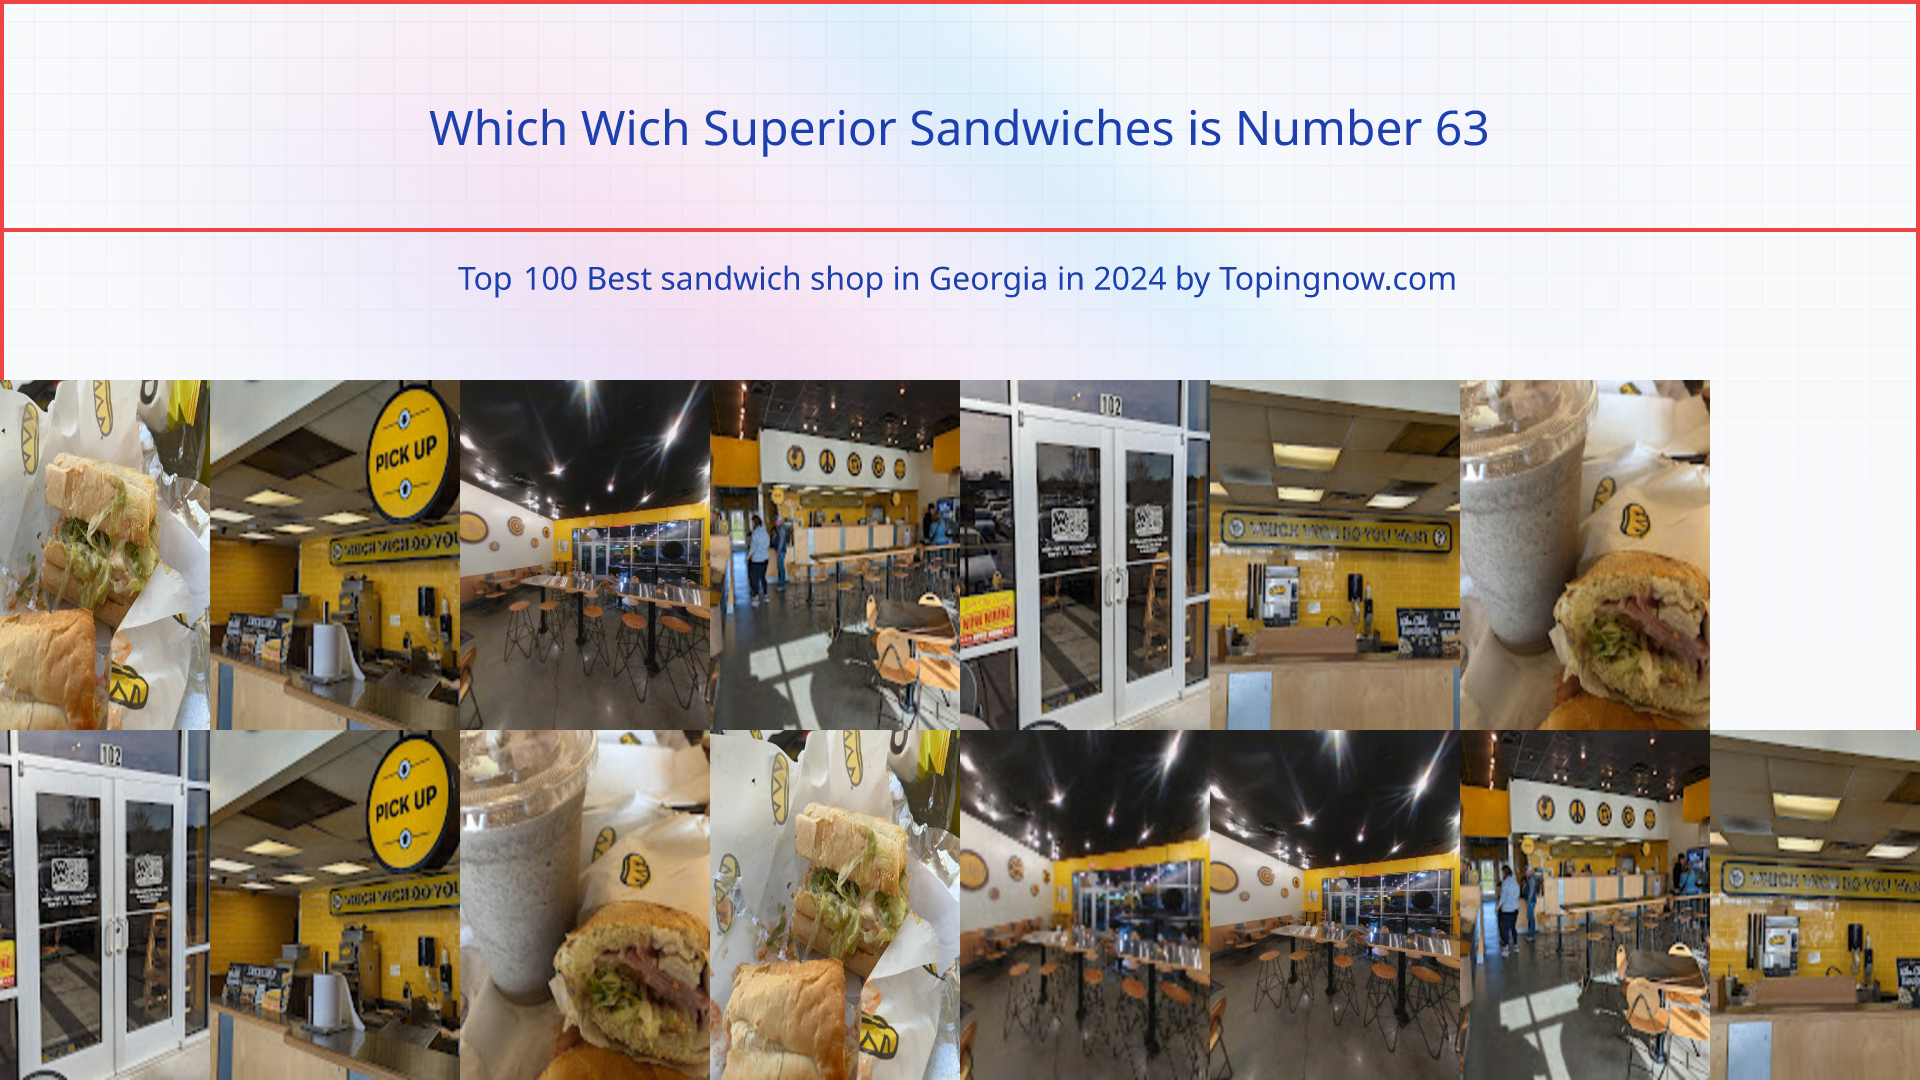 Which Wich Superior Sandwiches: Top 100 Best sandwich shop in Georgia in 2024